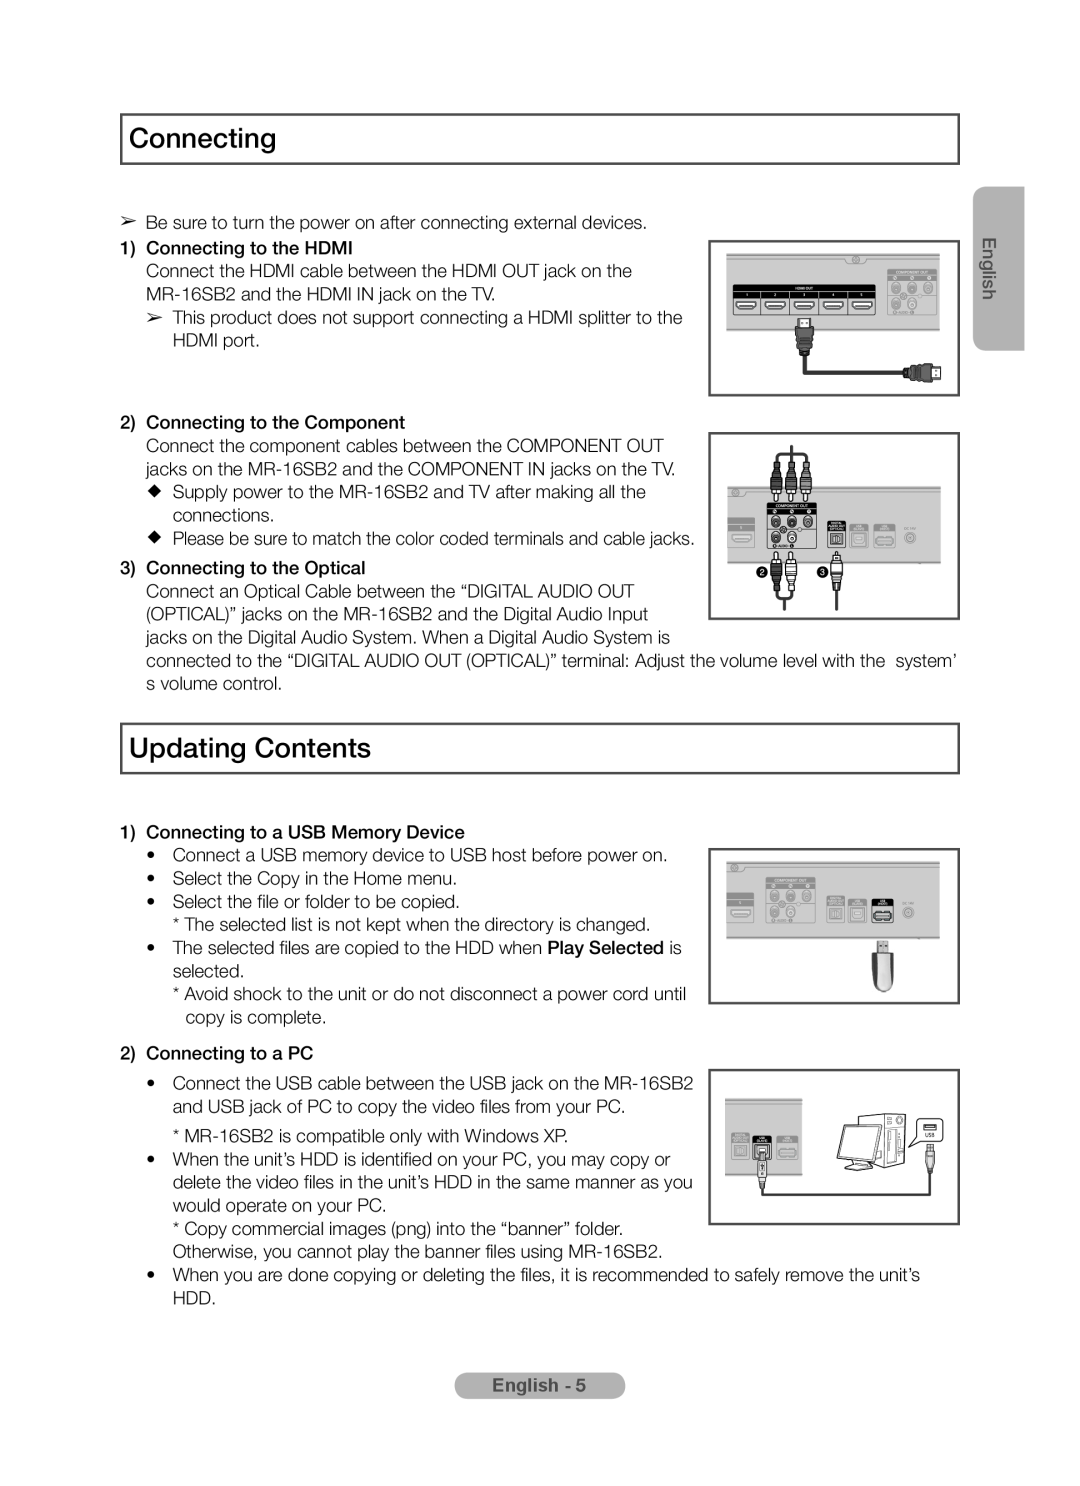 Samsung MR-16SB2 manual Connecting, Updating Contents, English 